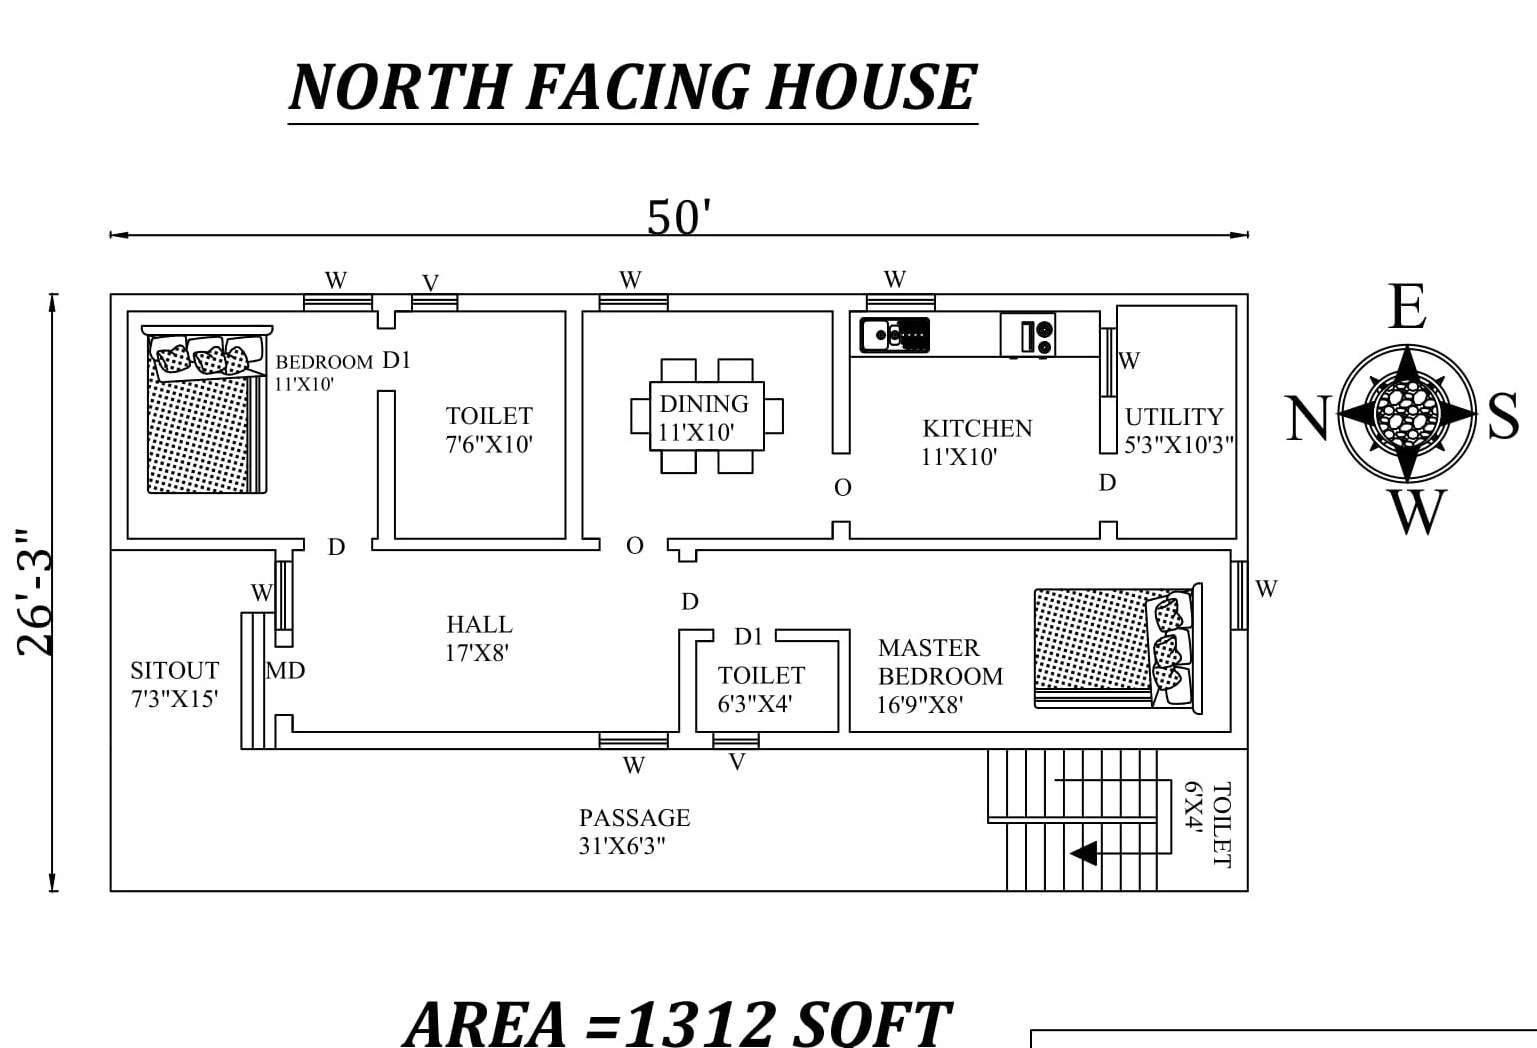 50 X26 3 2bhk North Facing House Plan As Per Vastu Shastra Autocad Dwg File Details Cadbull